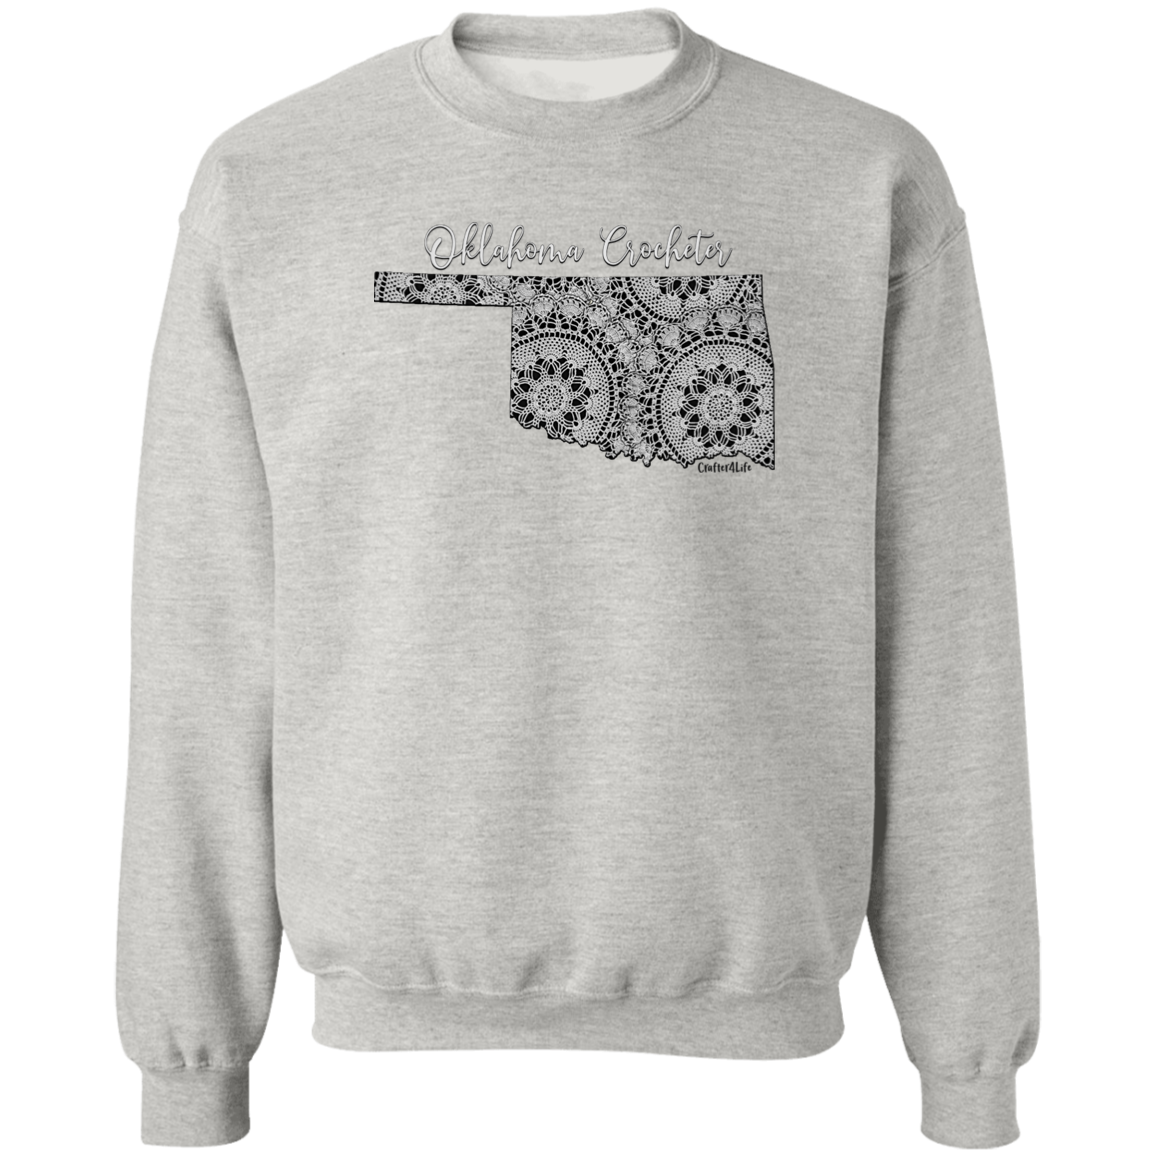 Oklahoma Crocheter Crewneck Pullover Sweatshirt